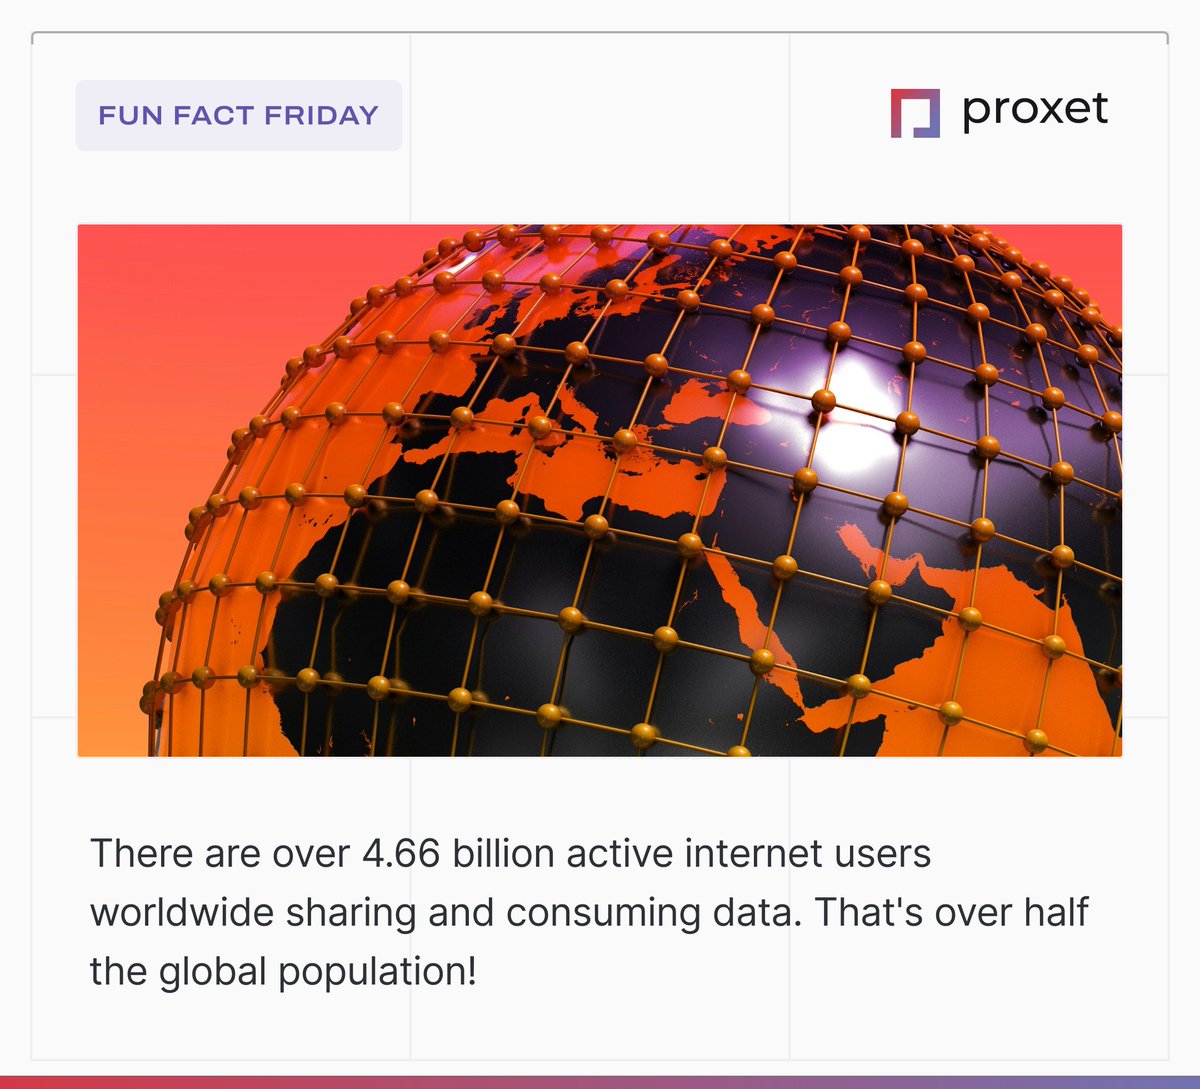 Fun Fact Friday here!

#FunFactFriday #ProxetSocial #data #dataconsumption